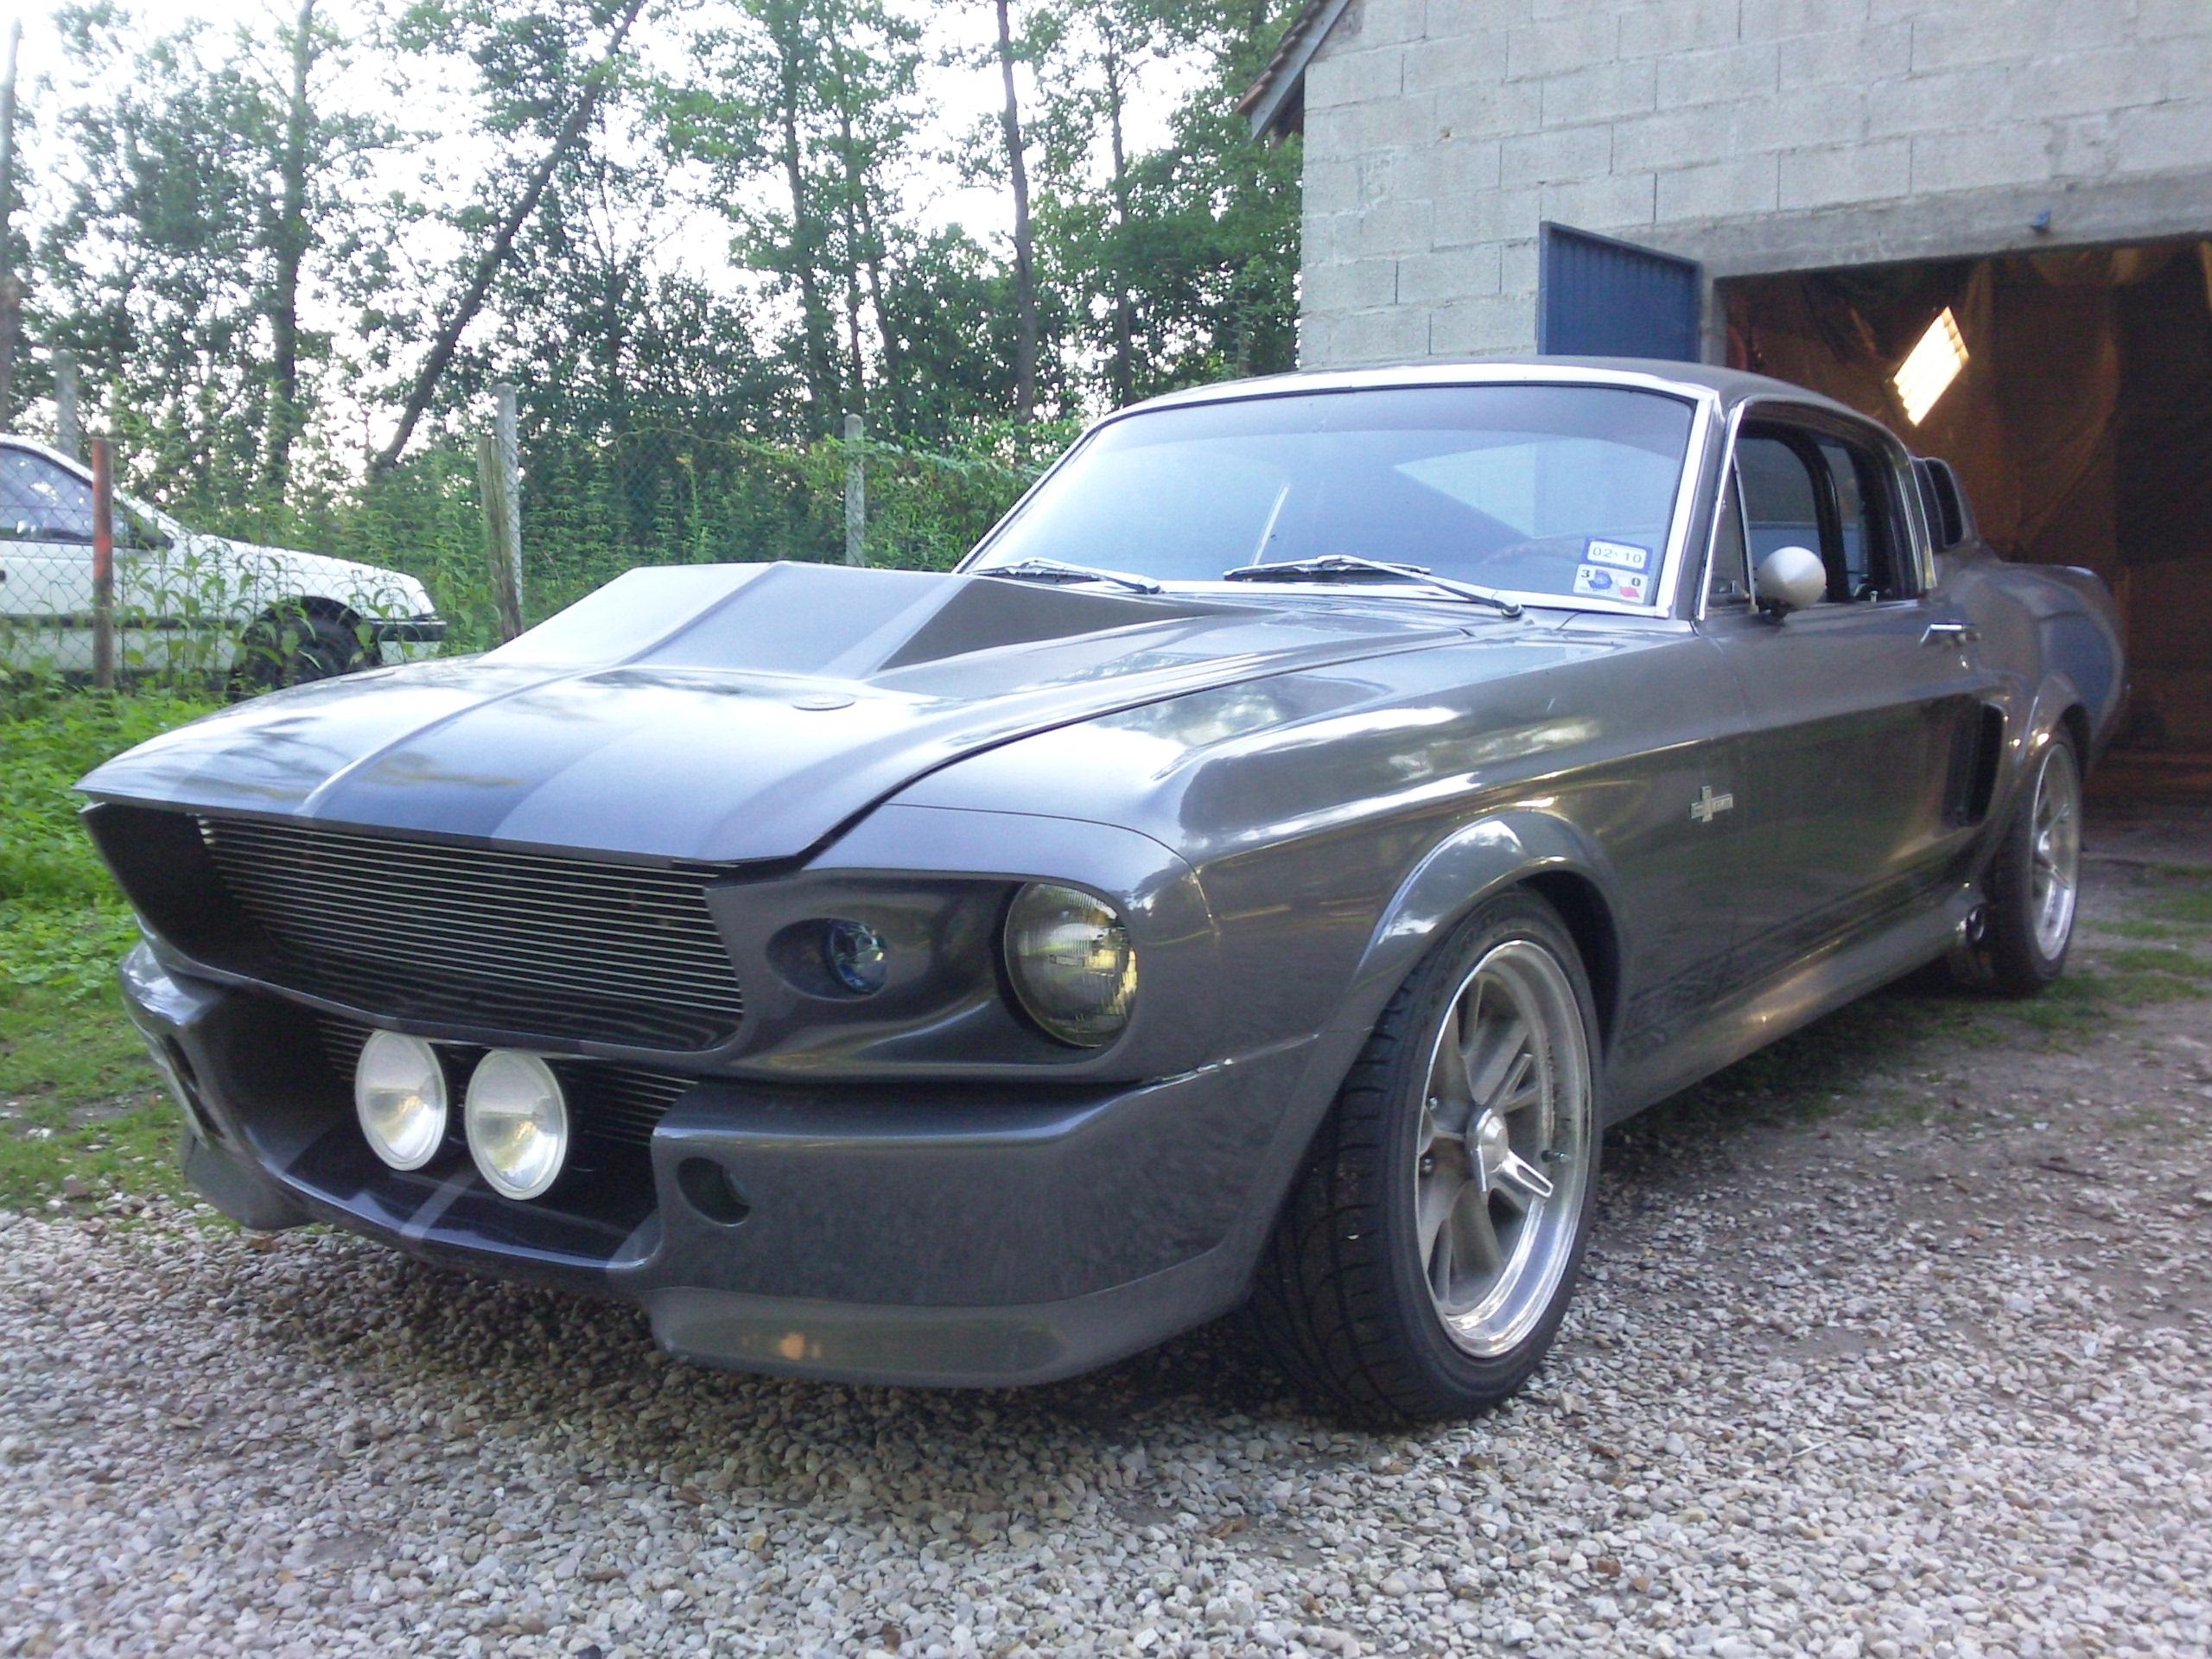 Richard’s 815hp 1967 Shelby Super Snake Eleanor Mustang ...